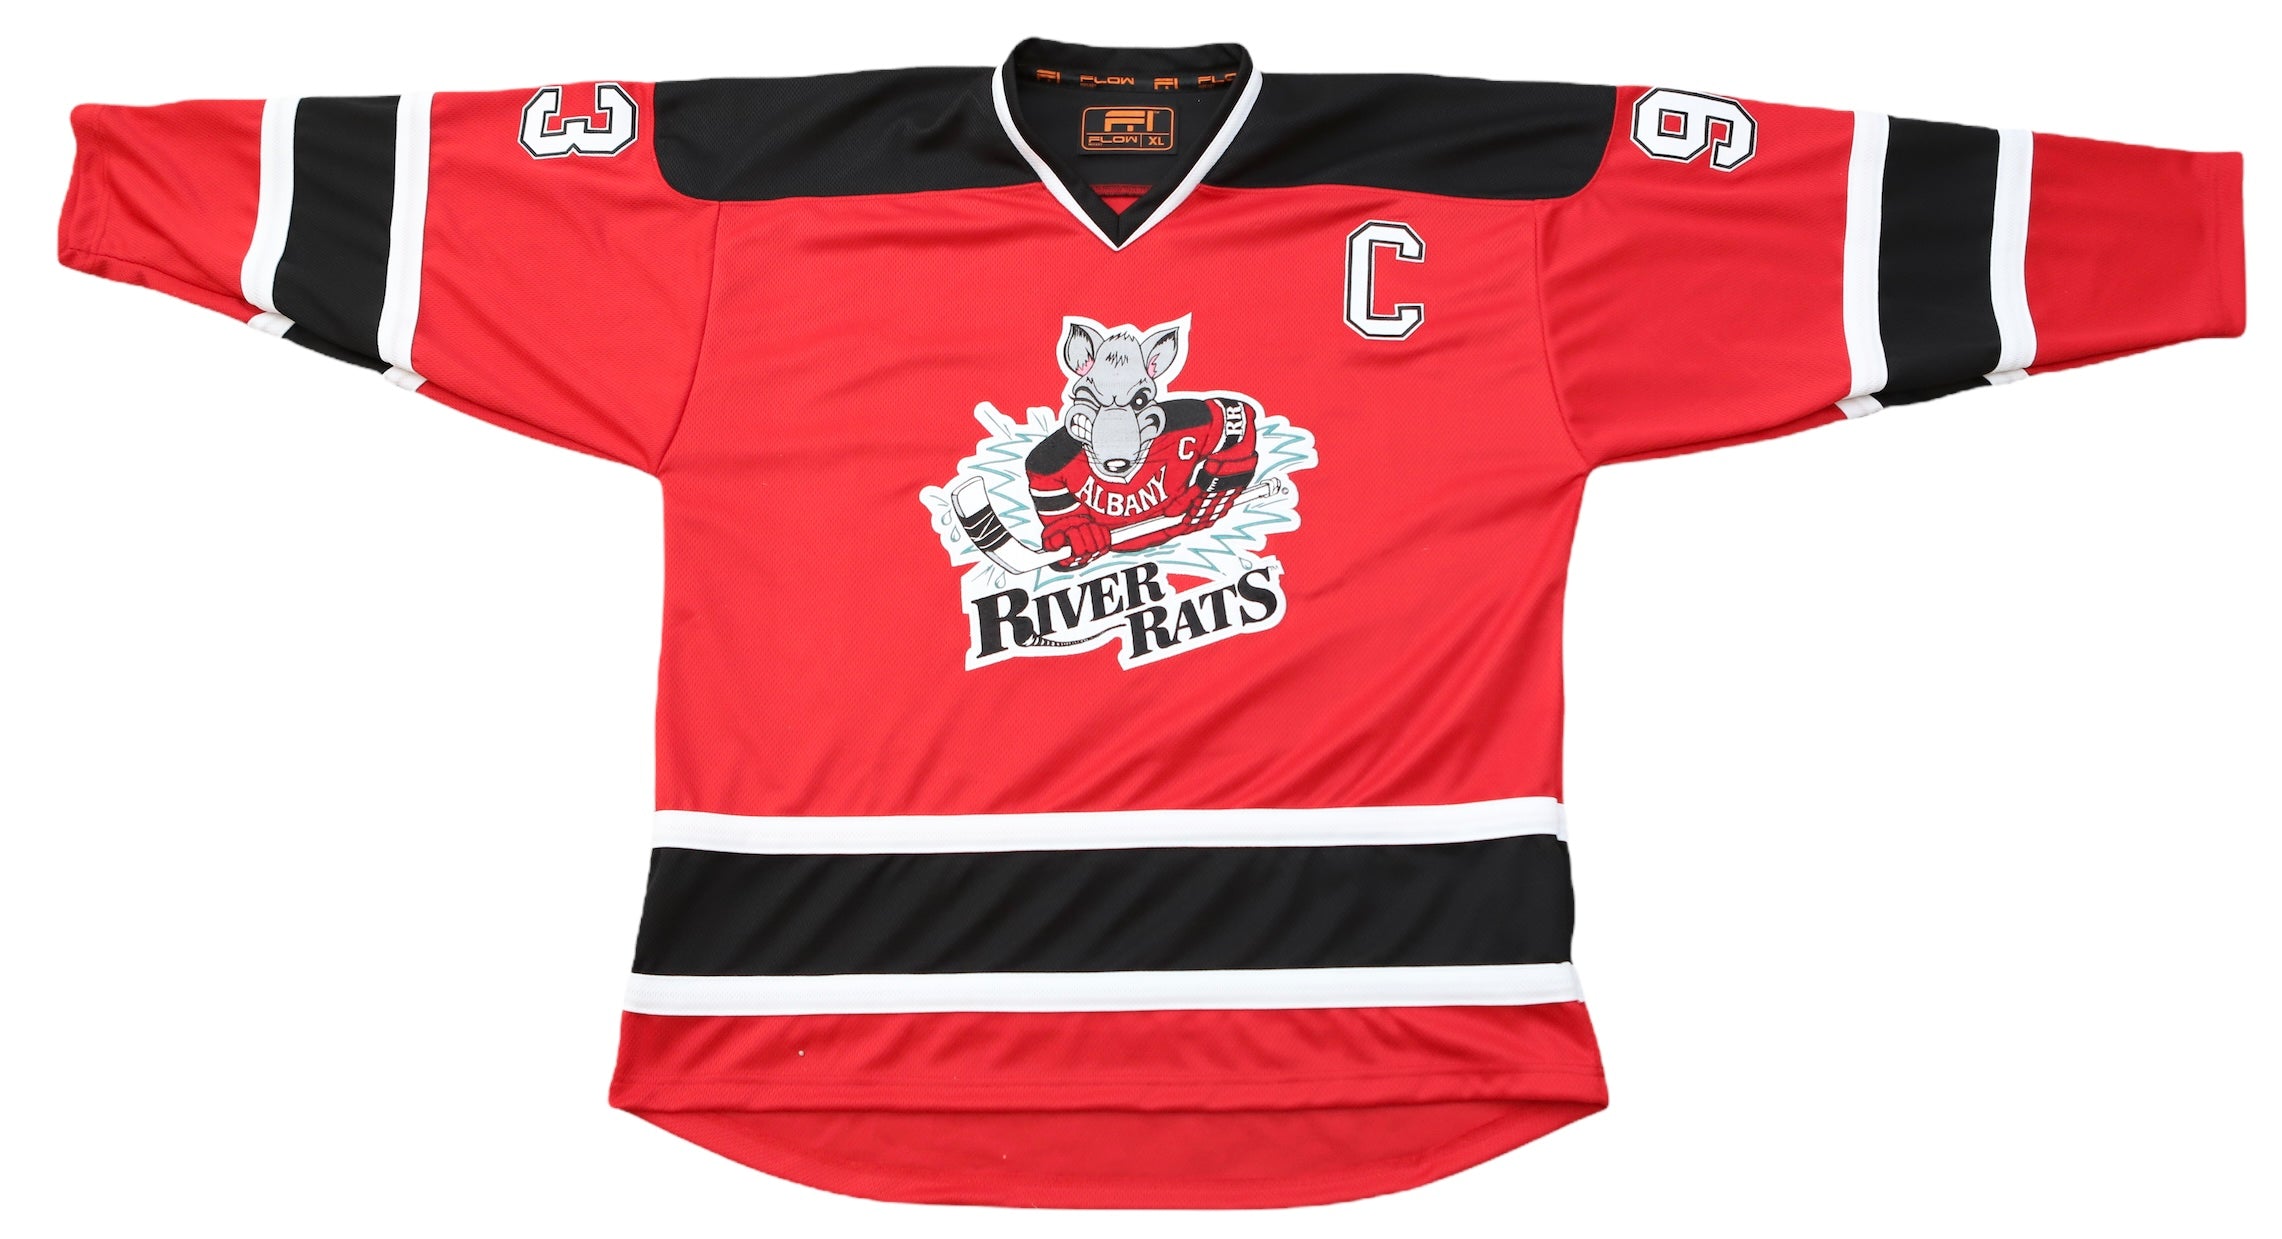 Richmond Royals hockey jerseys - Youth XL & L - VintageSportsGear